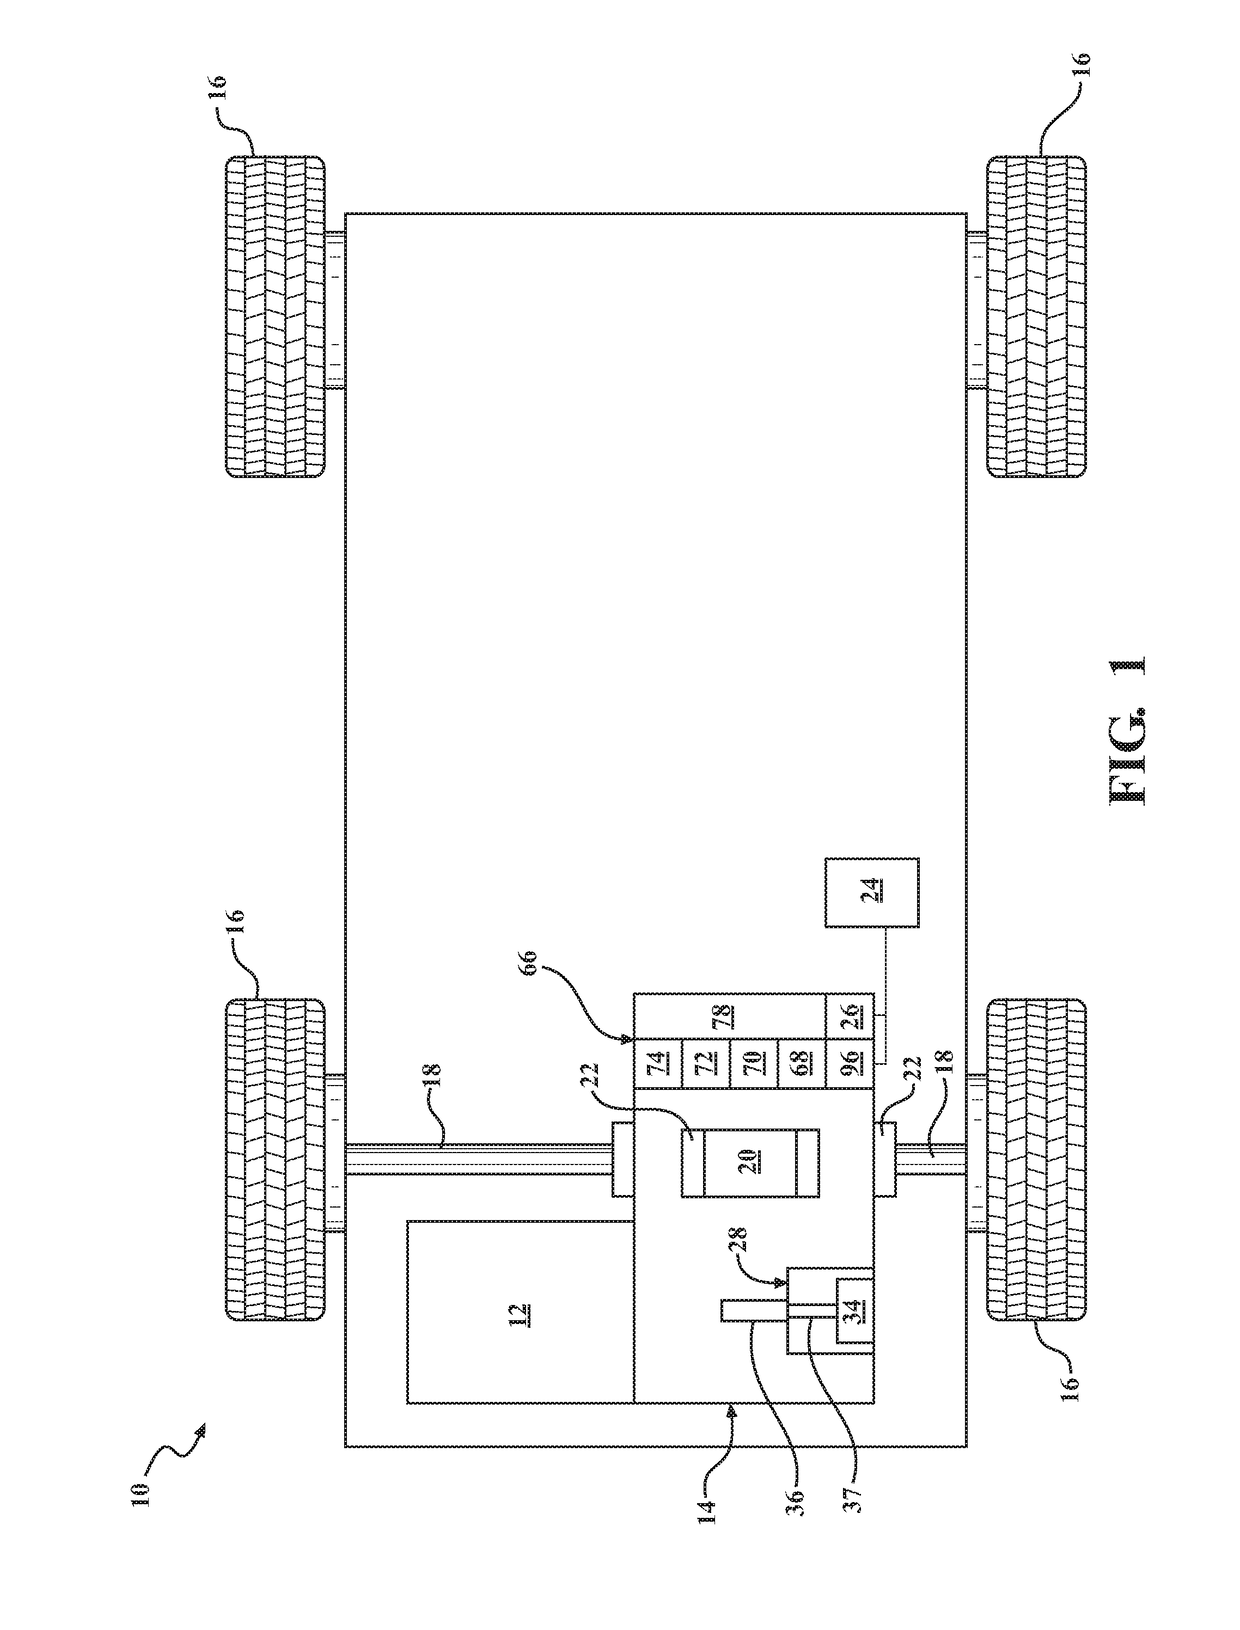 Multi-pressure hydraulic control system for a dual clutch automatic transmission